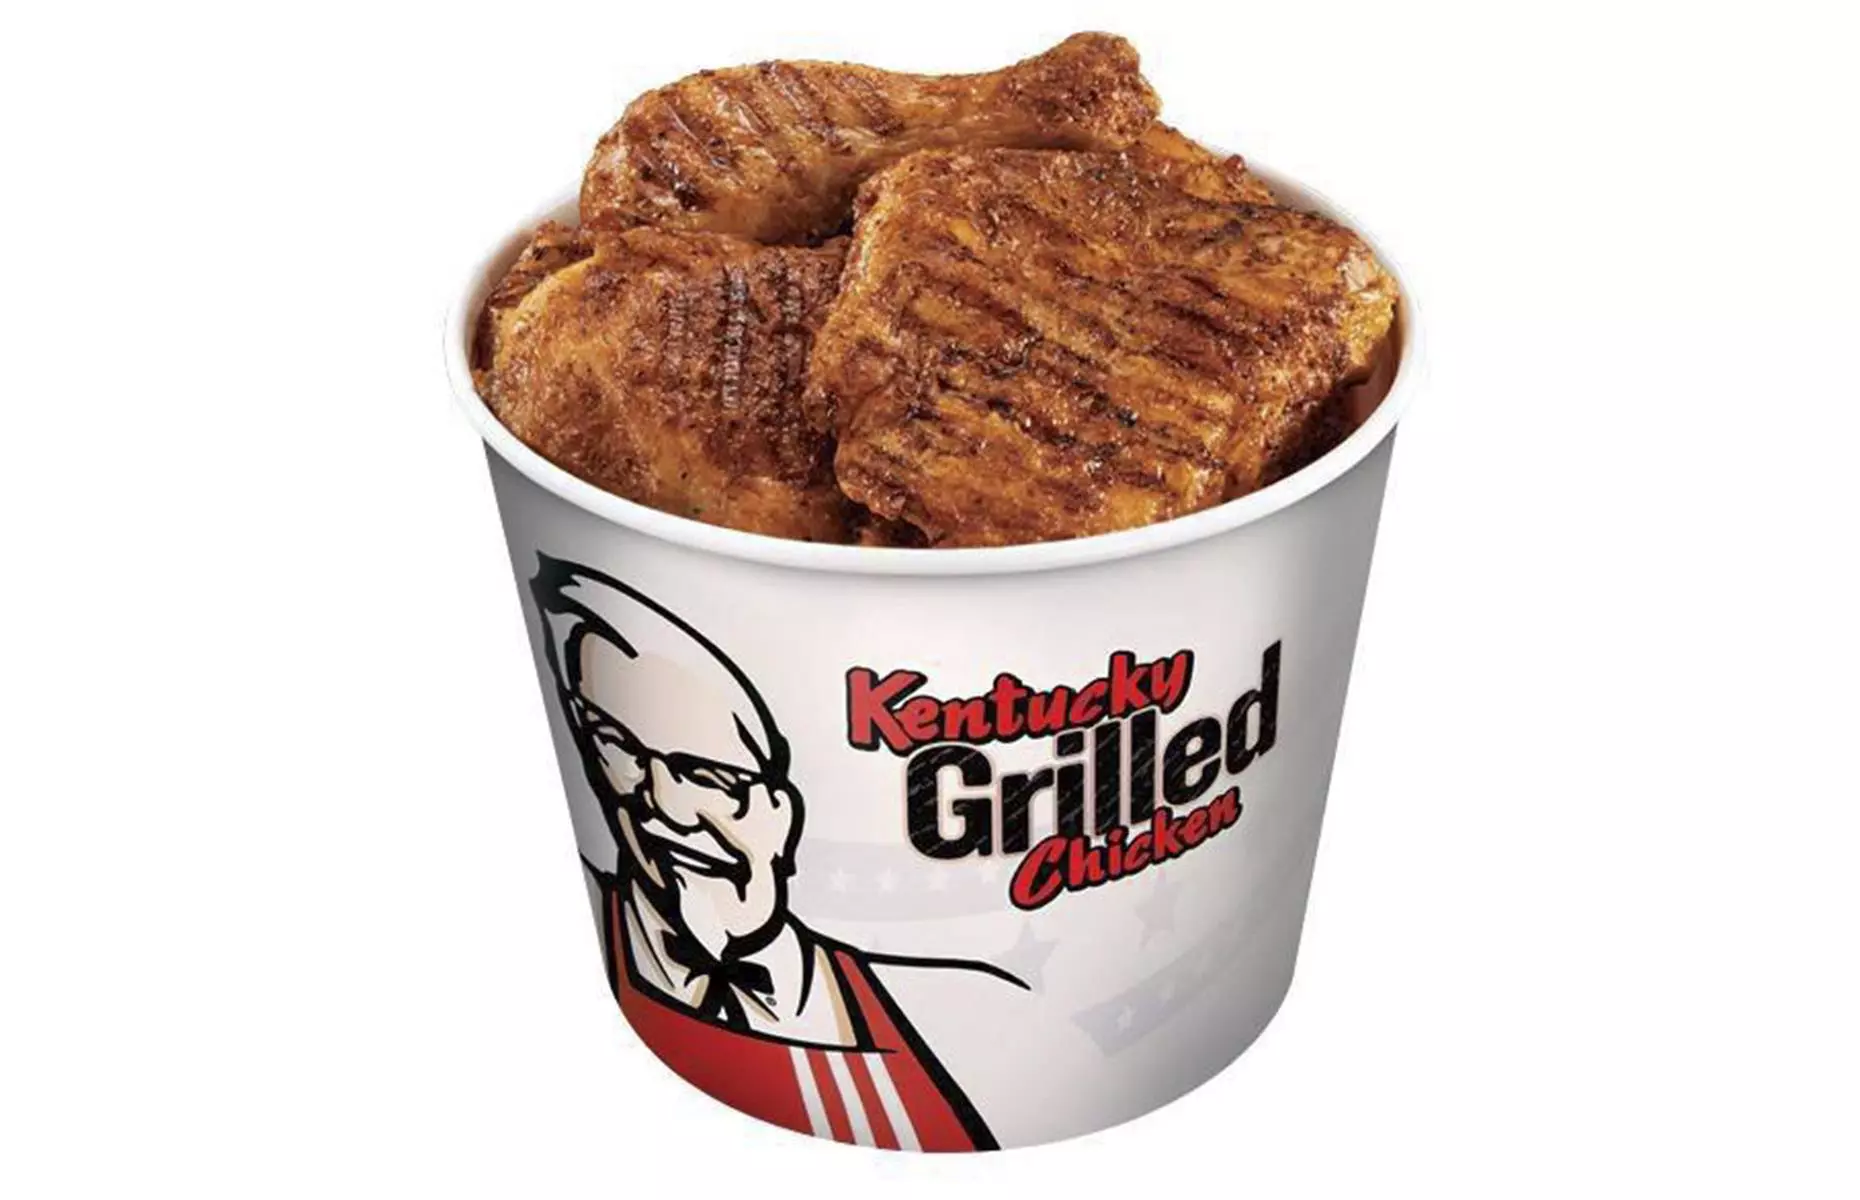 Kentucky grilled chicken